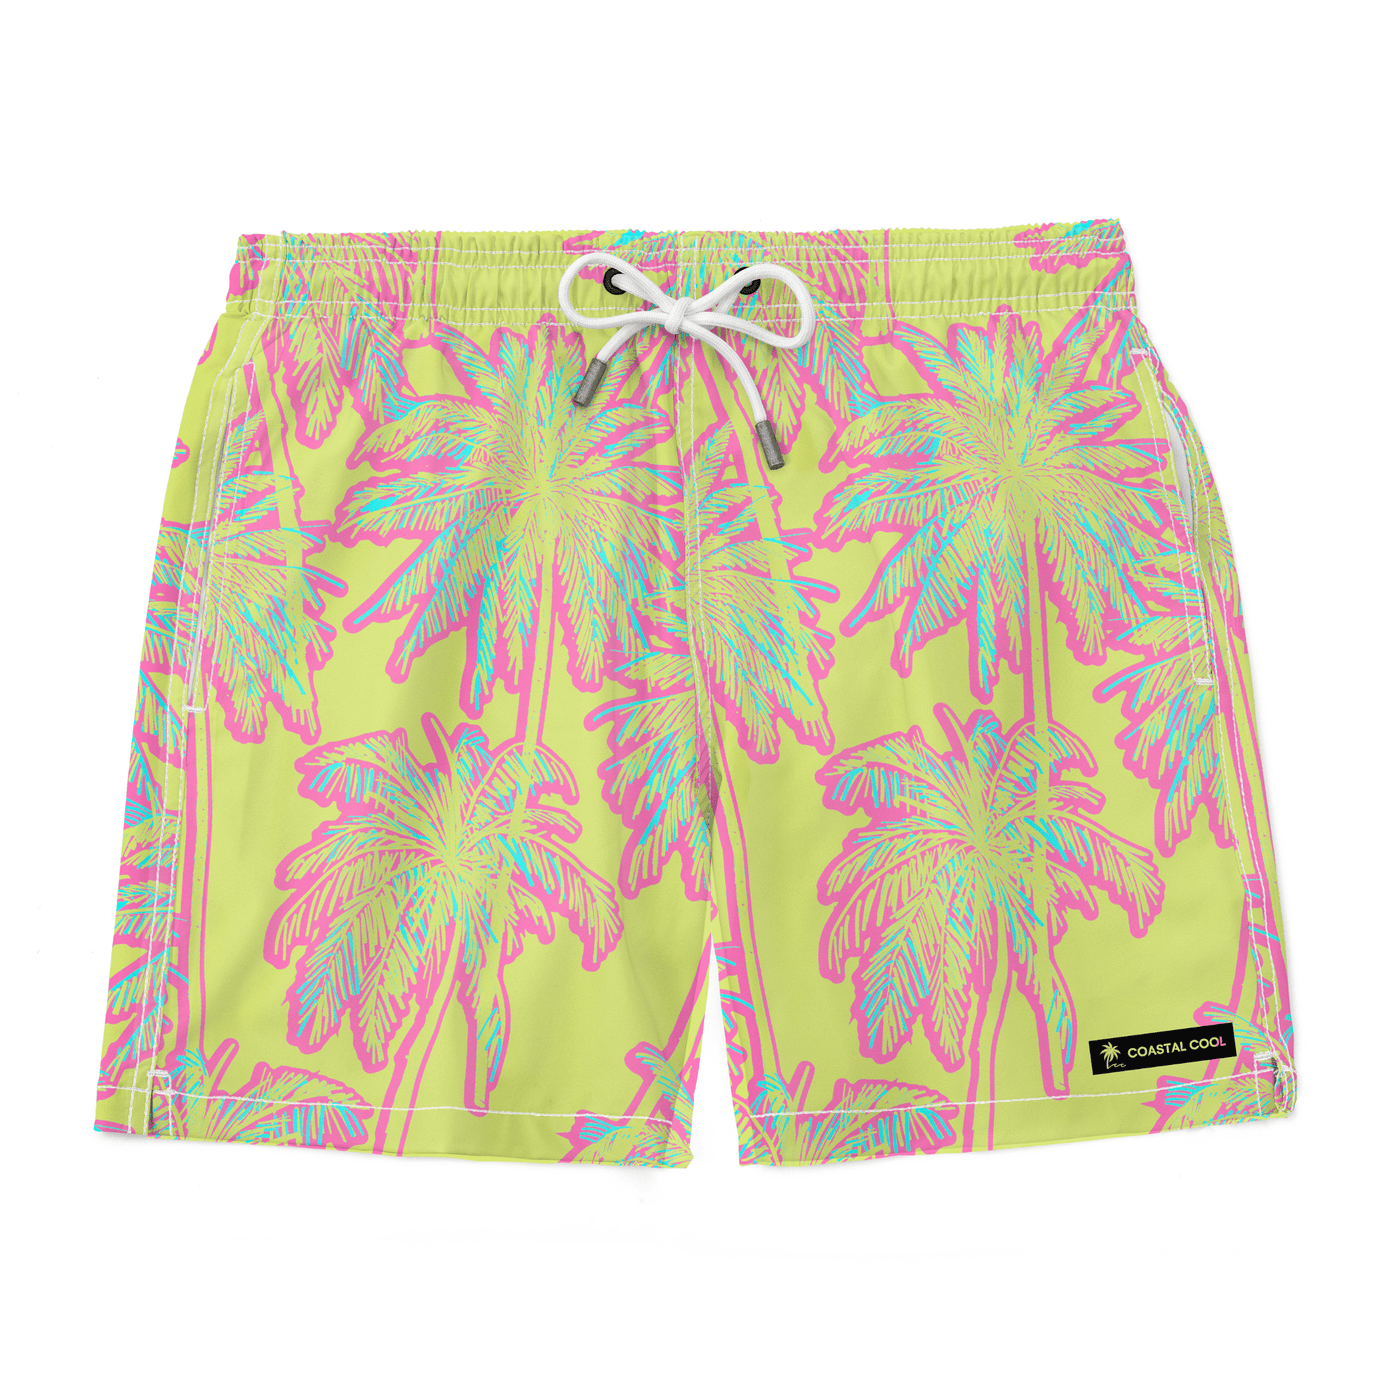 Virgin Islands Swim Trunks - Coastal Cool - Swimwear and Beachwear - Recycled fabrics